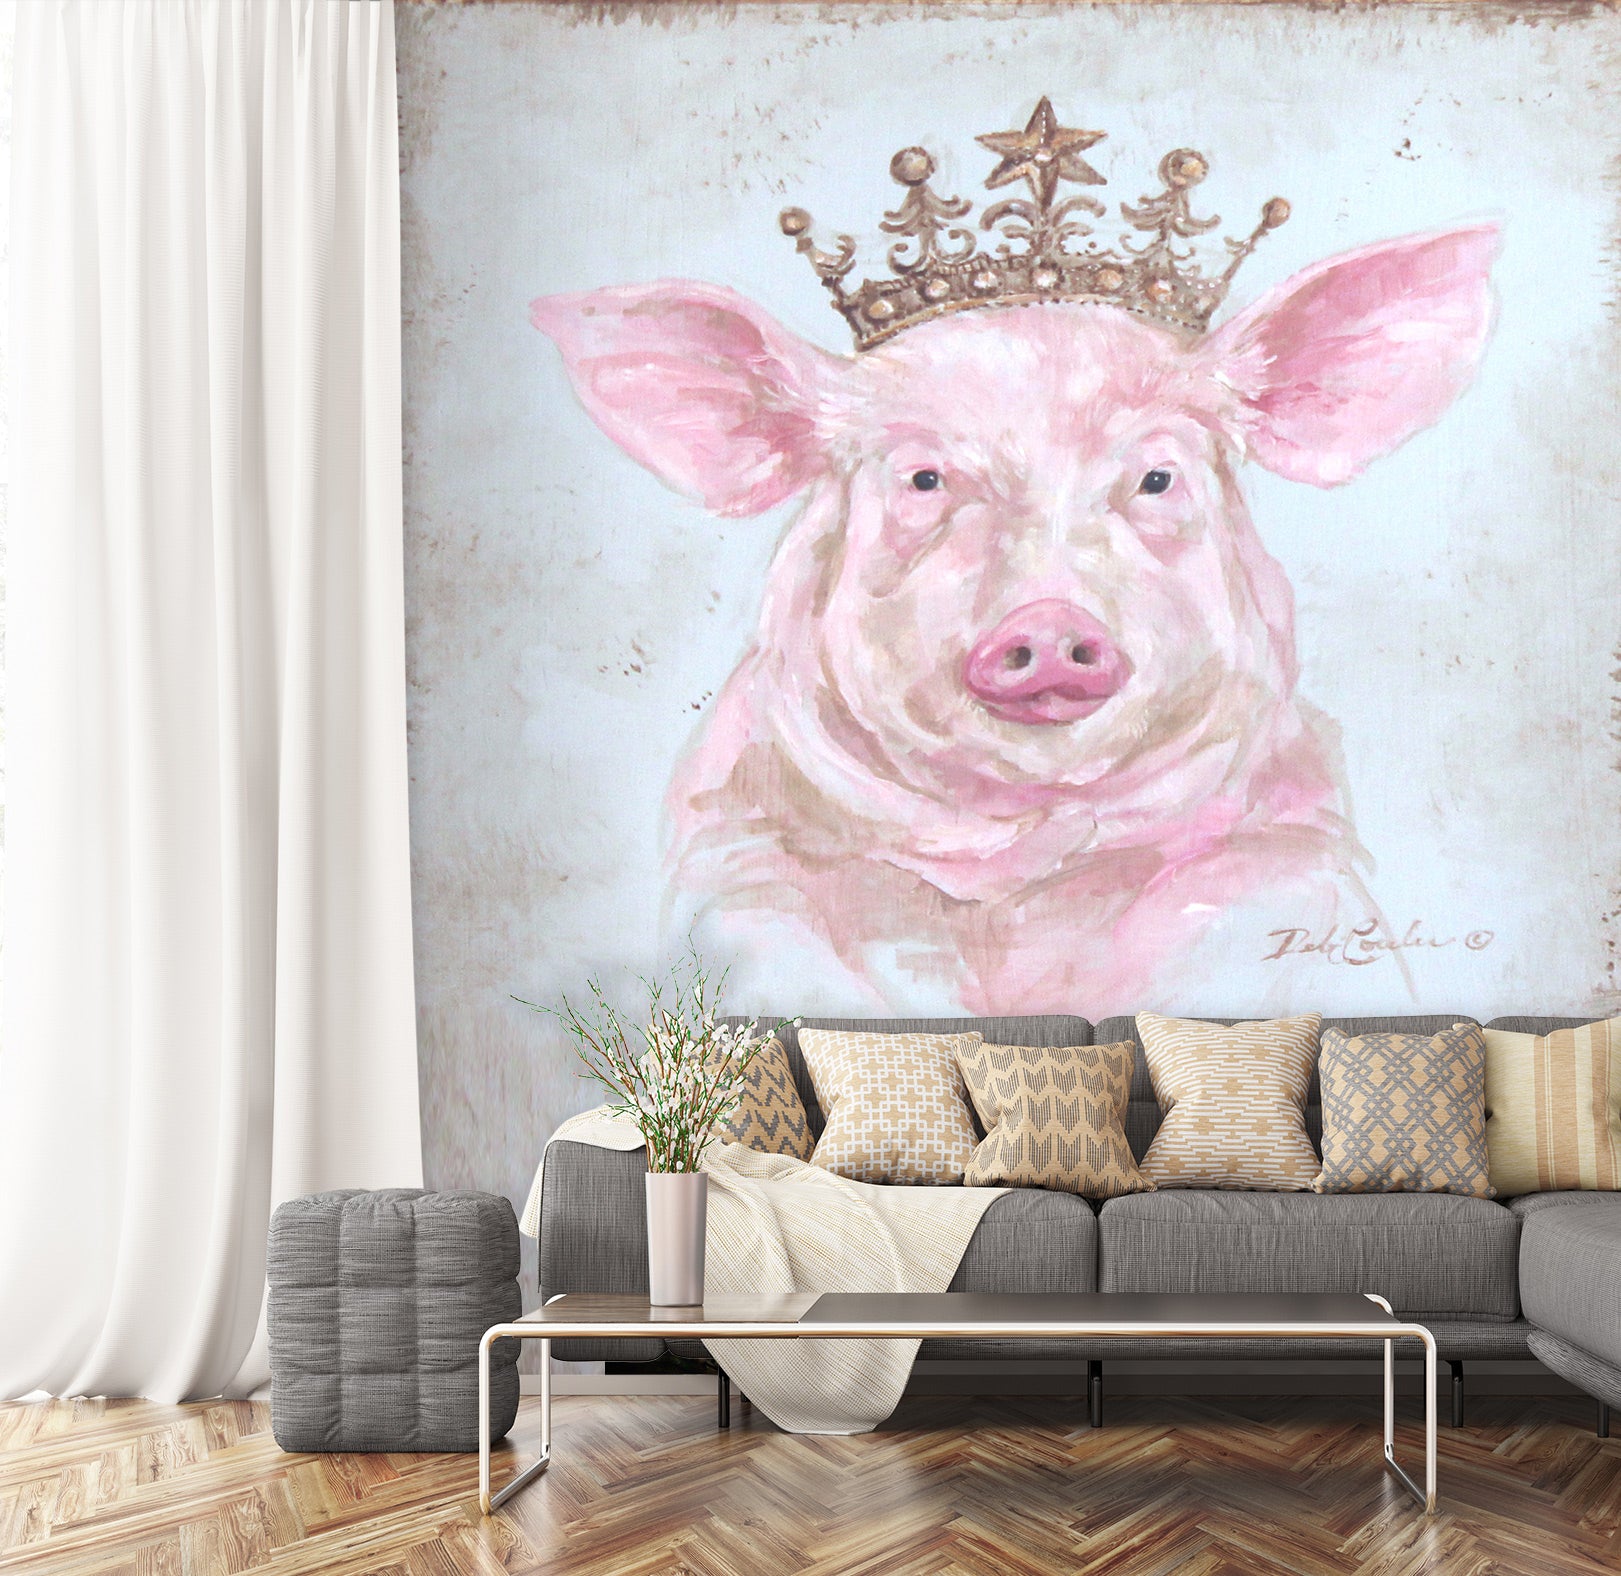 3D Pig Crown 3161 Debi Coules Wall Mural Wall Murals